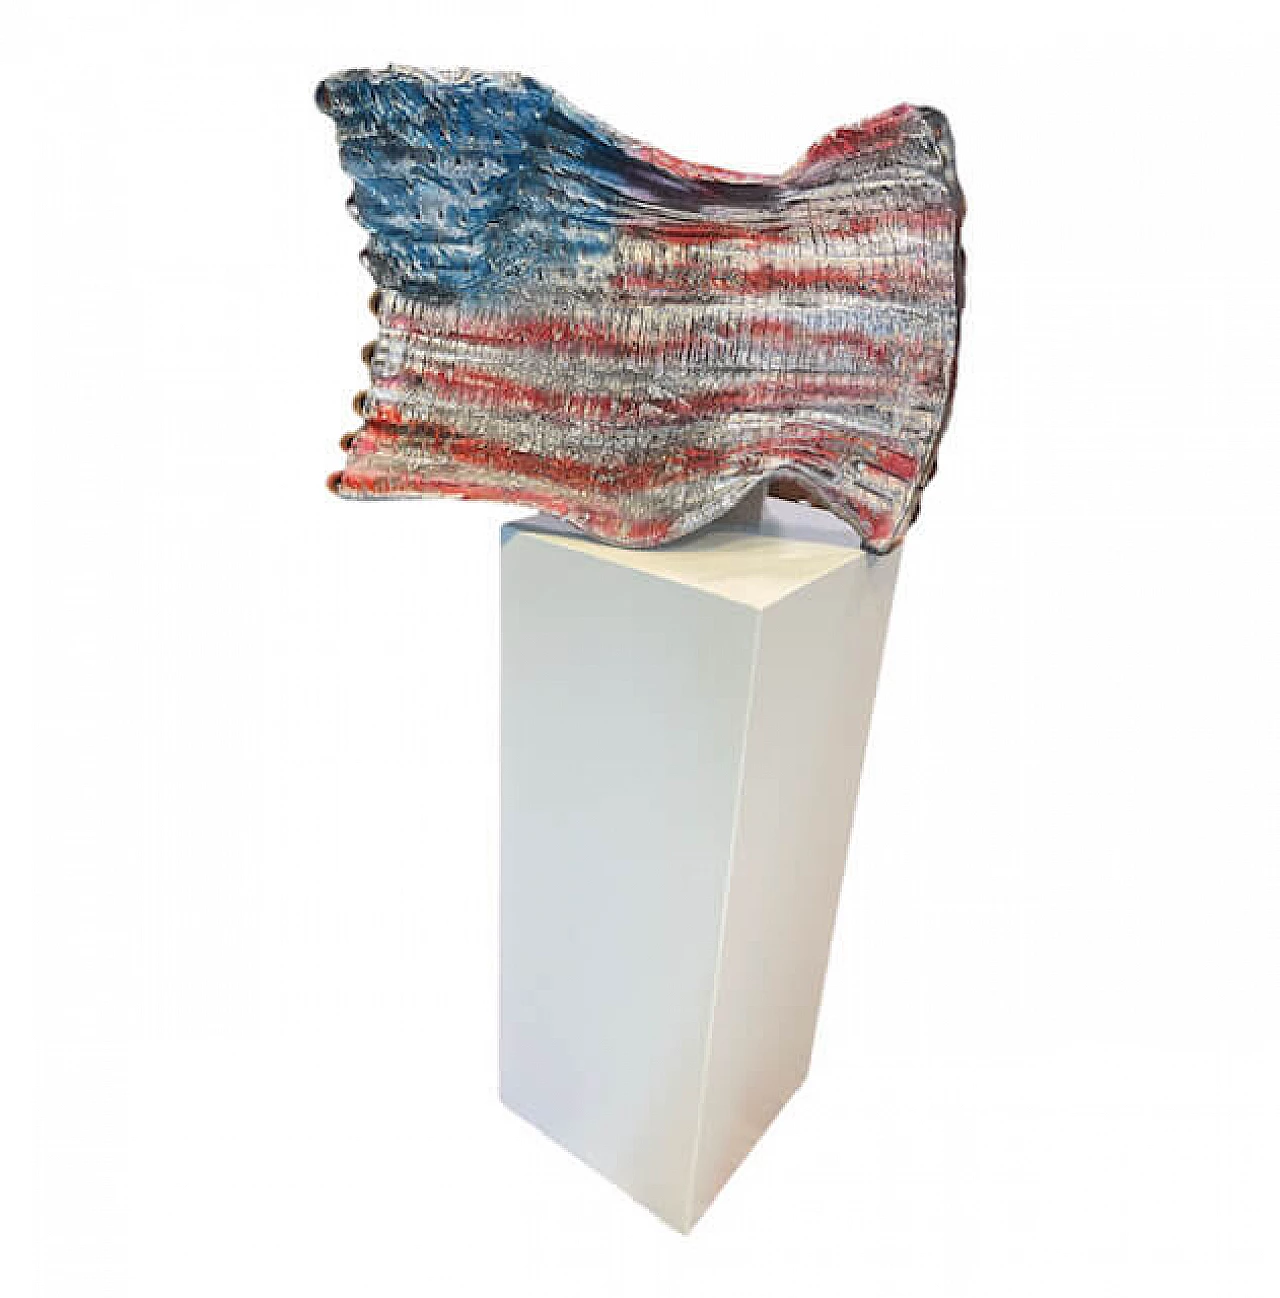 M'HORÒ sculpture depicting the American flag 4